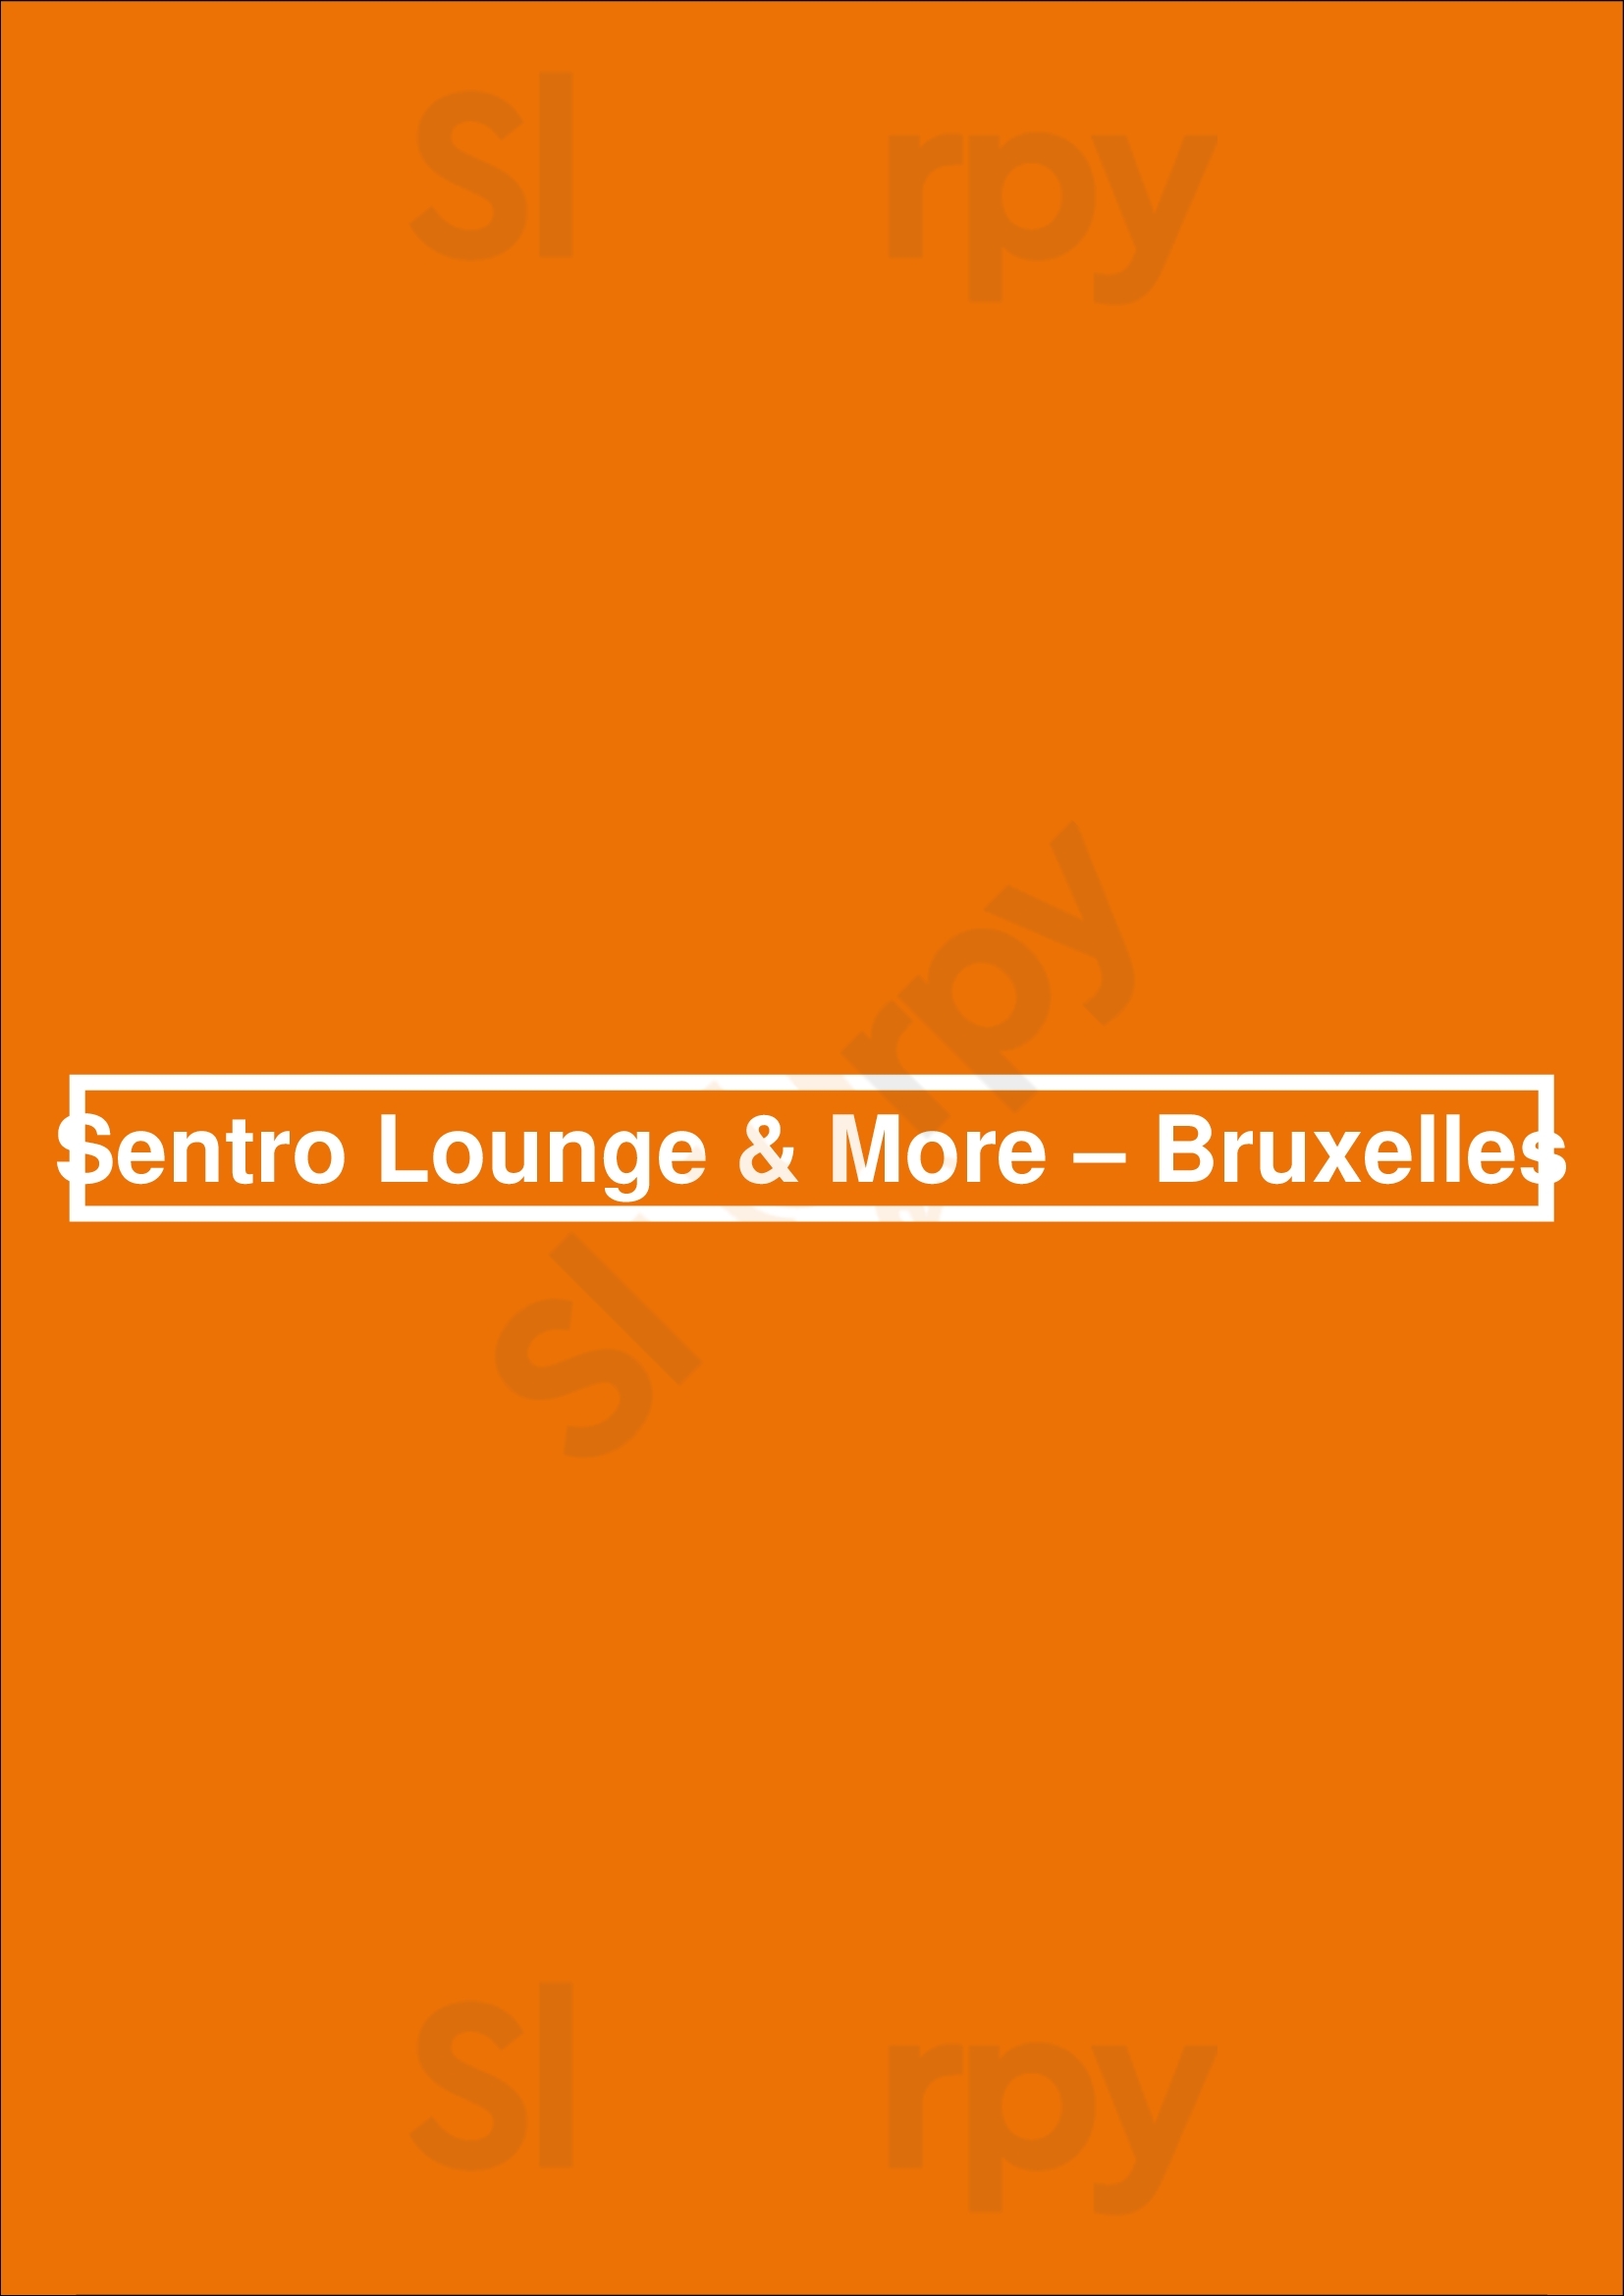 Sentro Lounge & More – Bruxelles Bruxelles Menu - 1